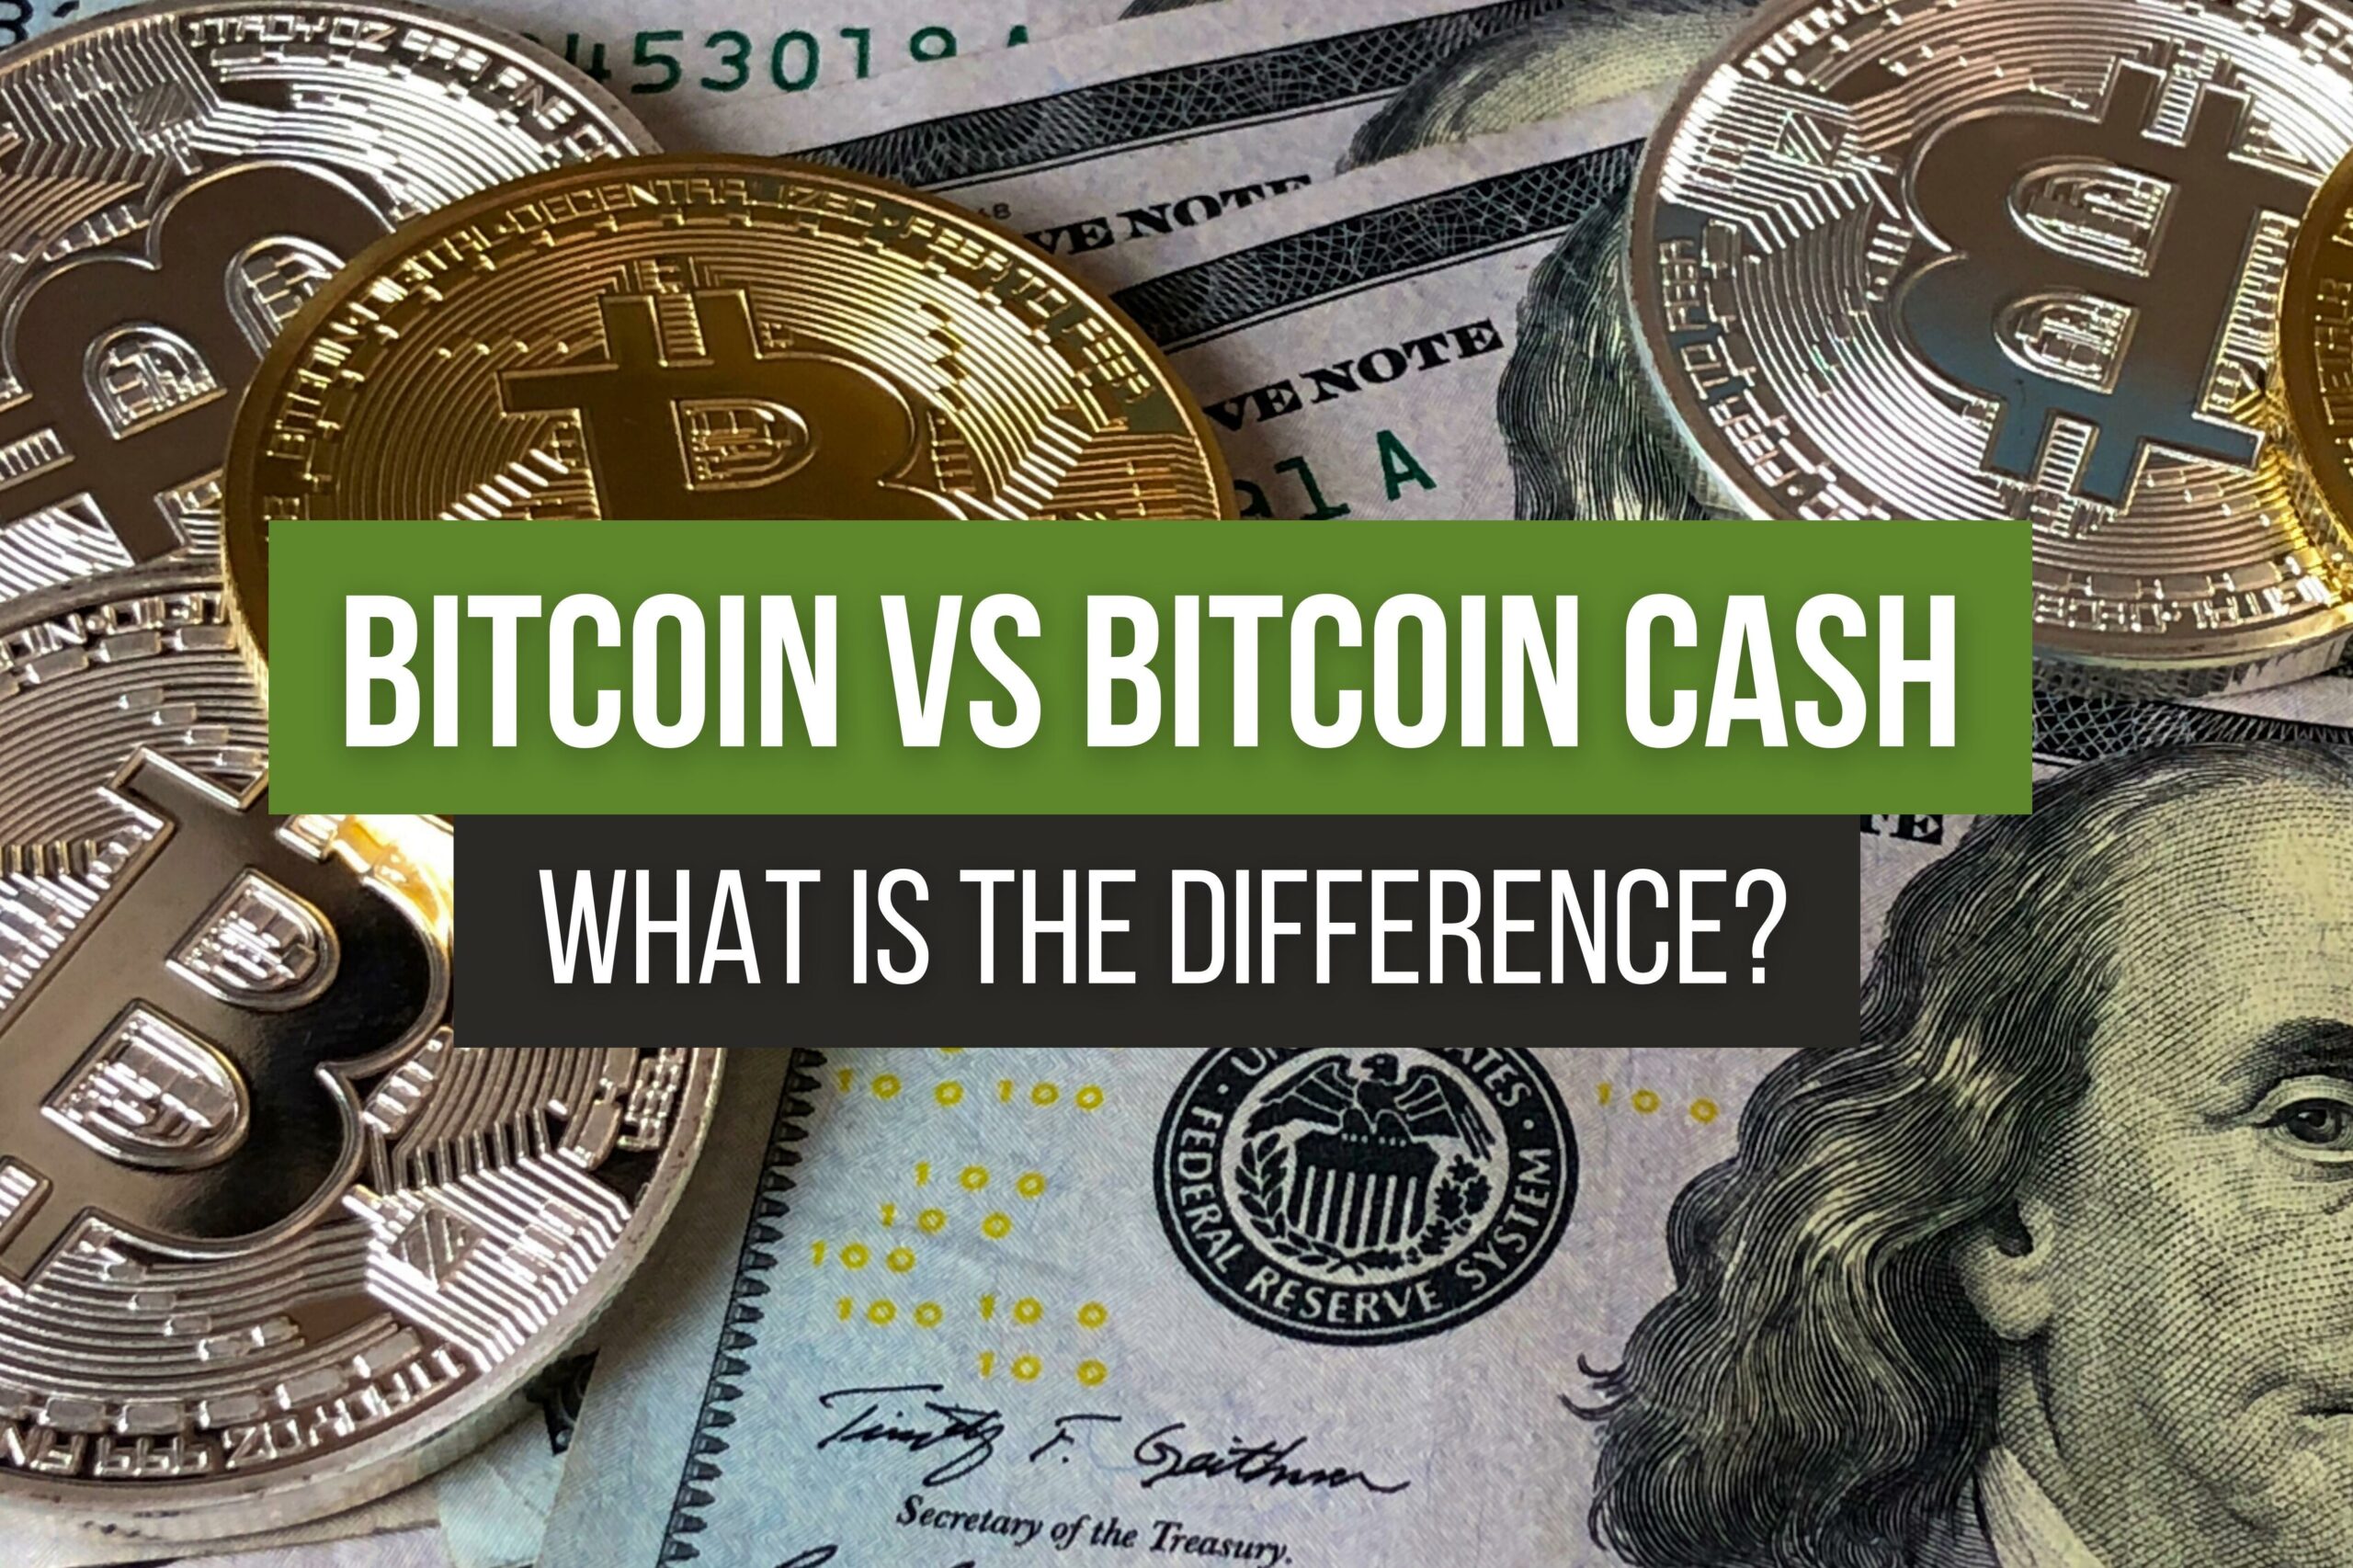 Bitcoin (BTC) and Bitcoin Cash (BCH)